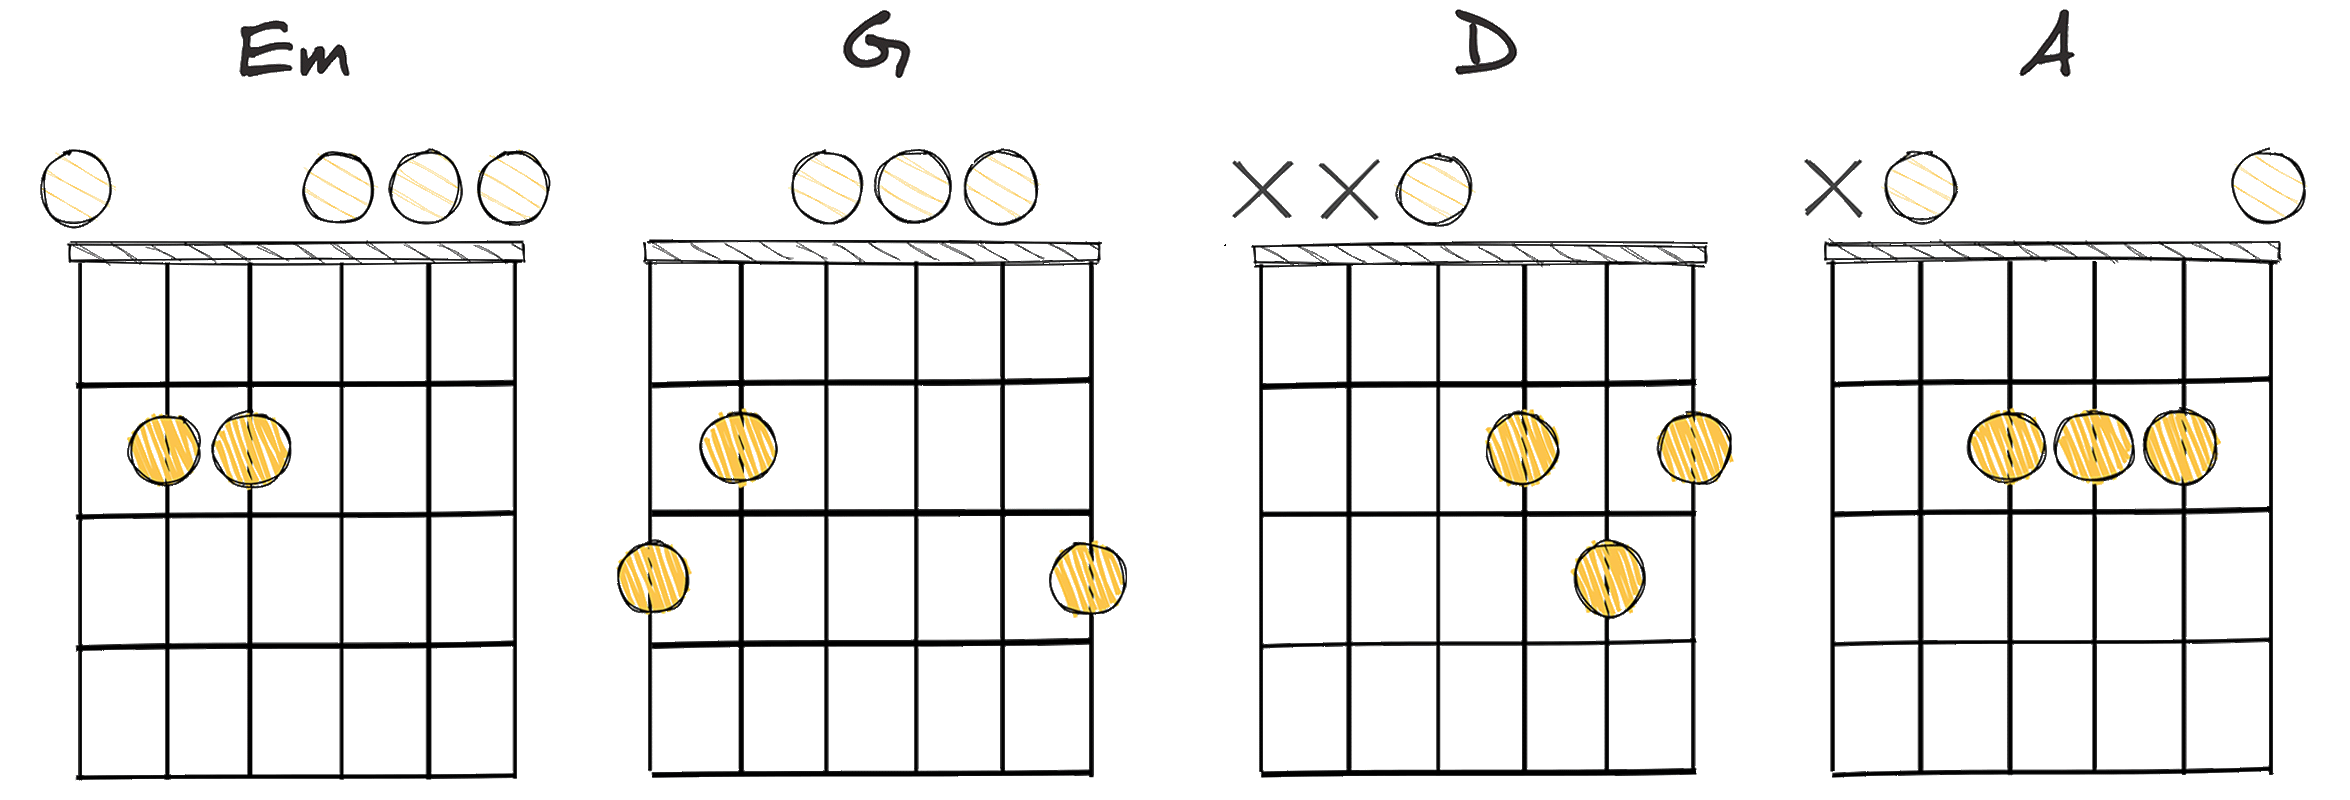 ii-IV-I-V (2-4-1-5) chords diagram